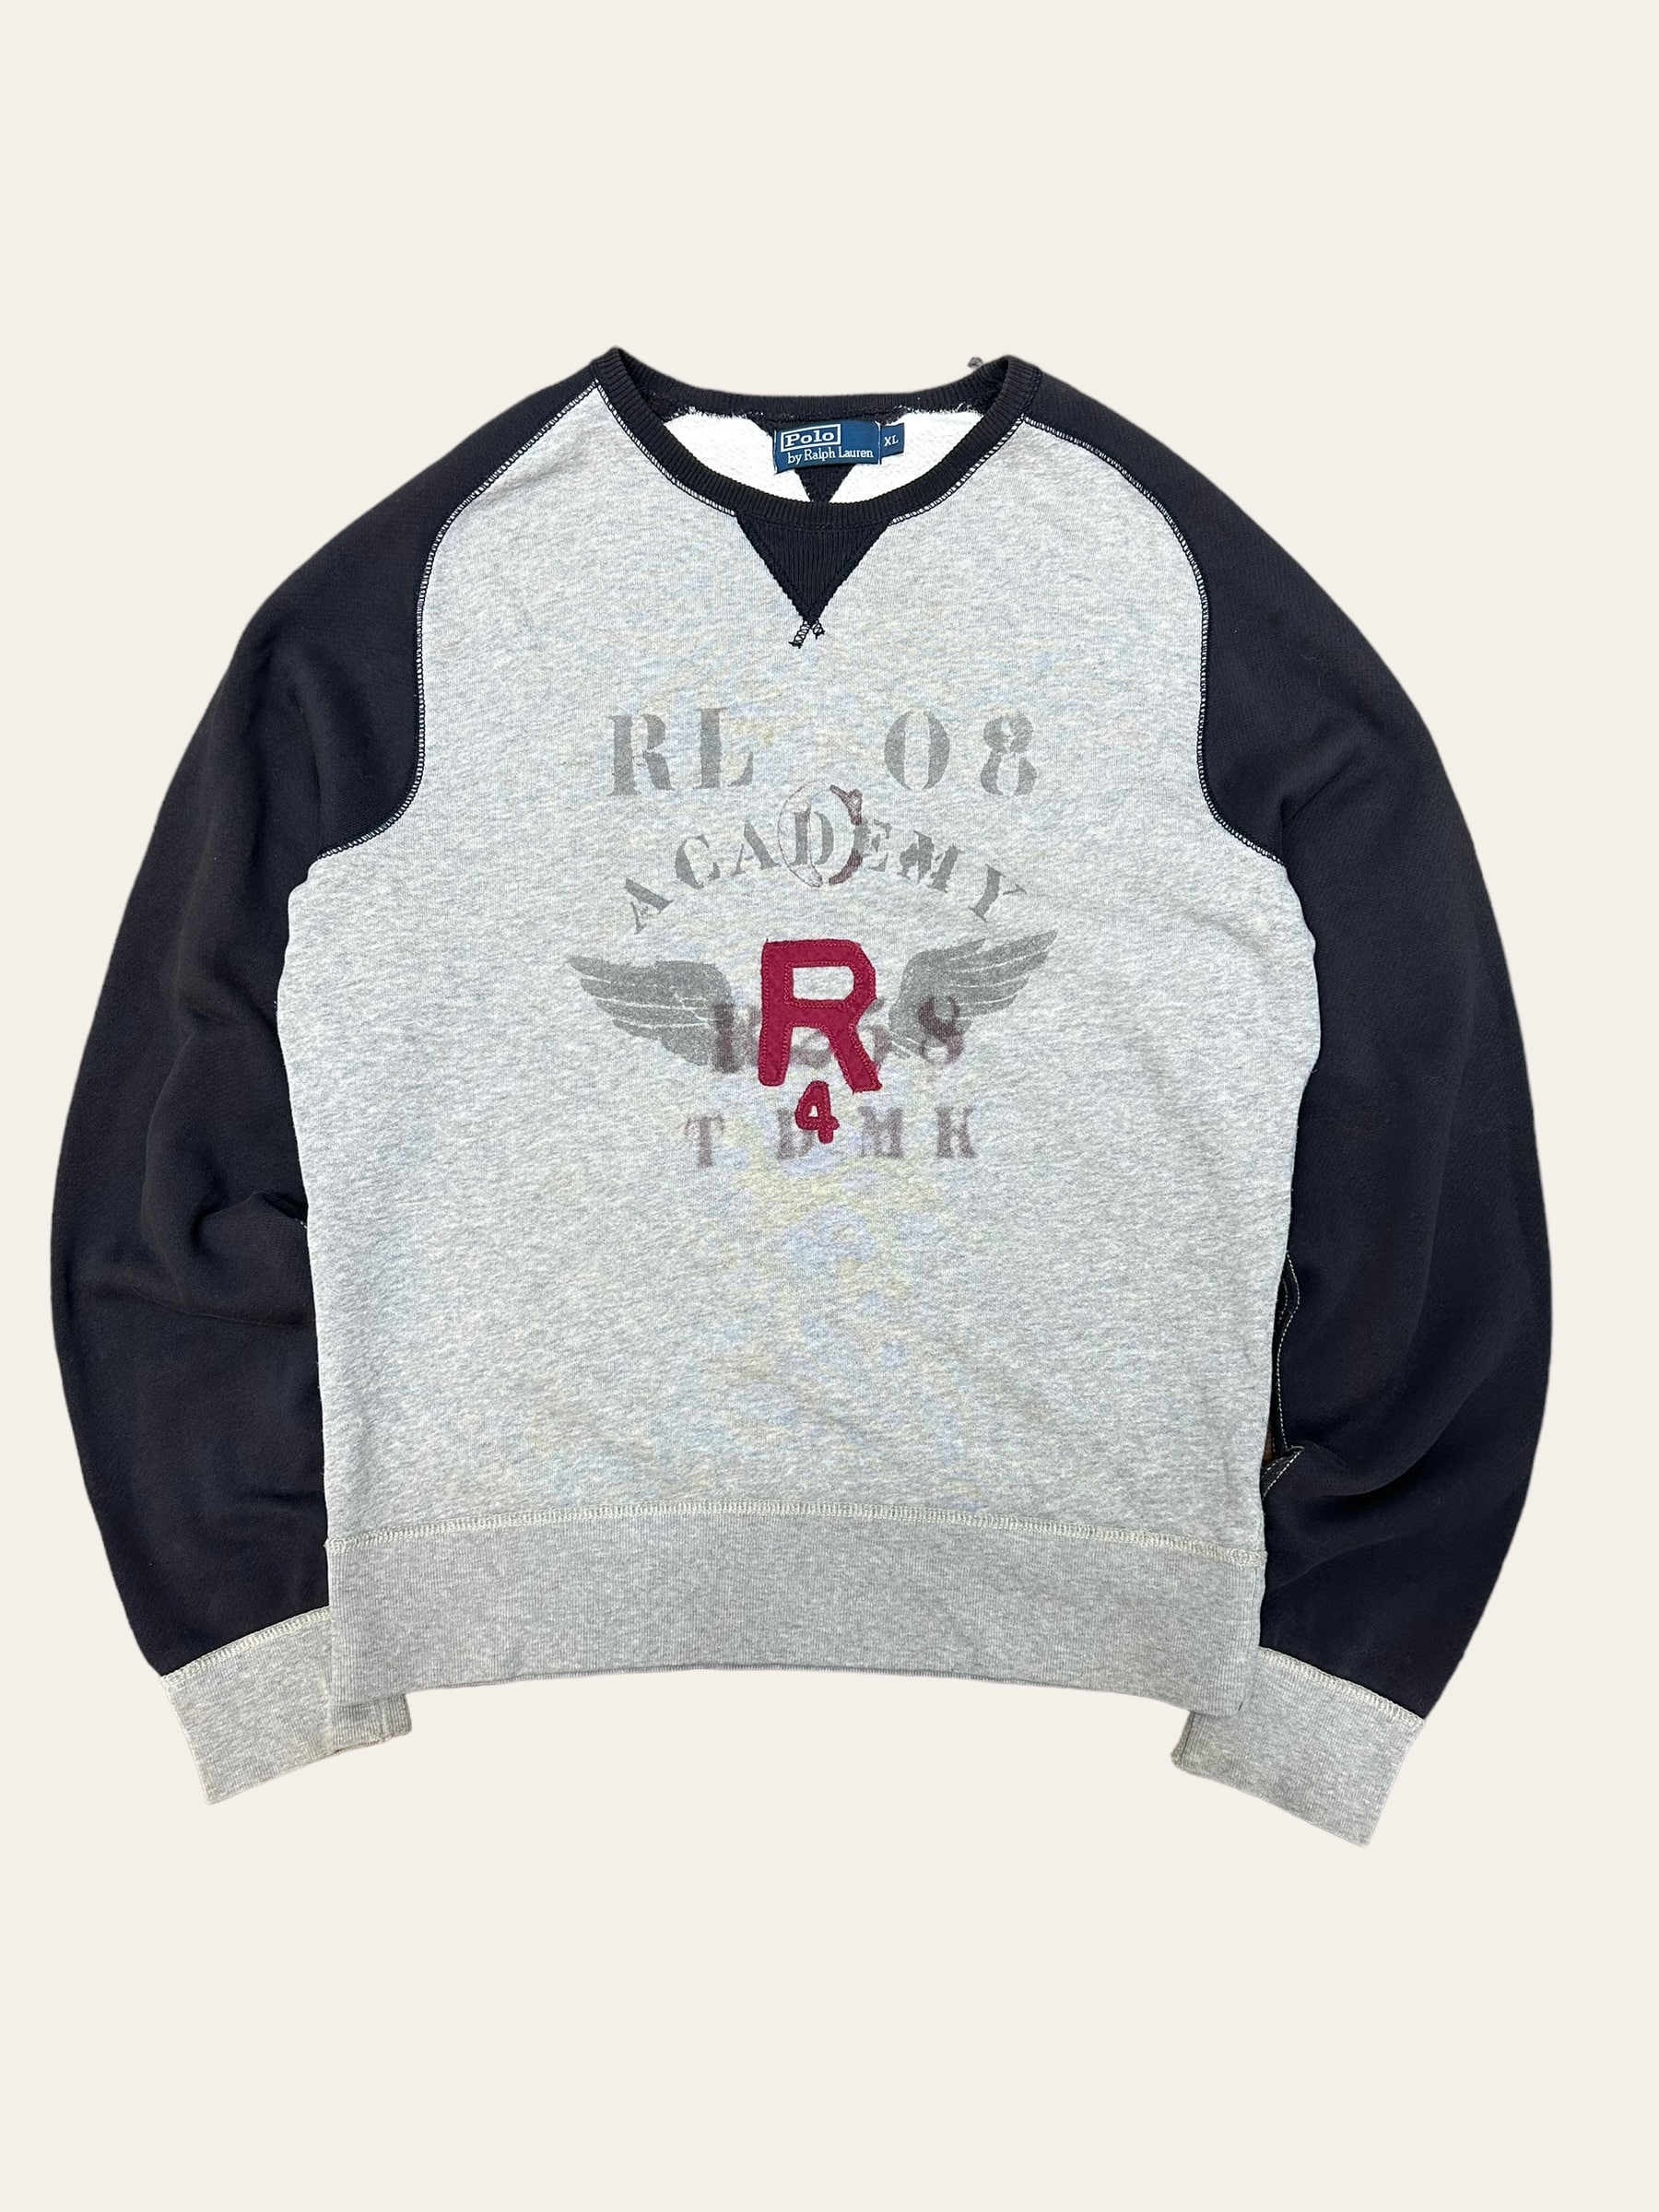 Polo ralph lauren gray/black R wing sweatshirt XL